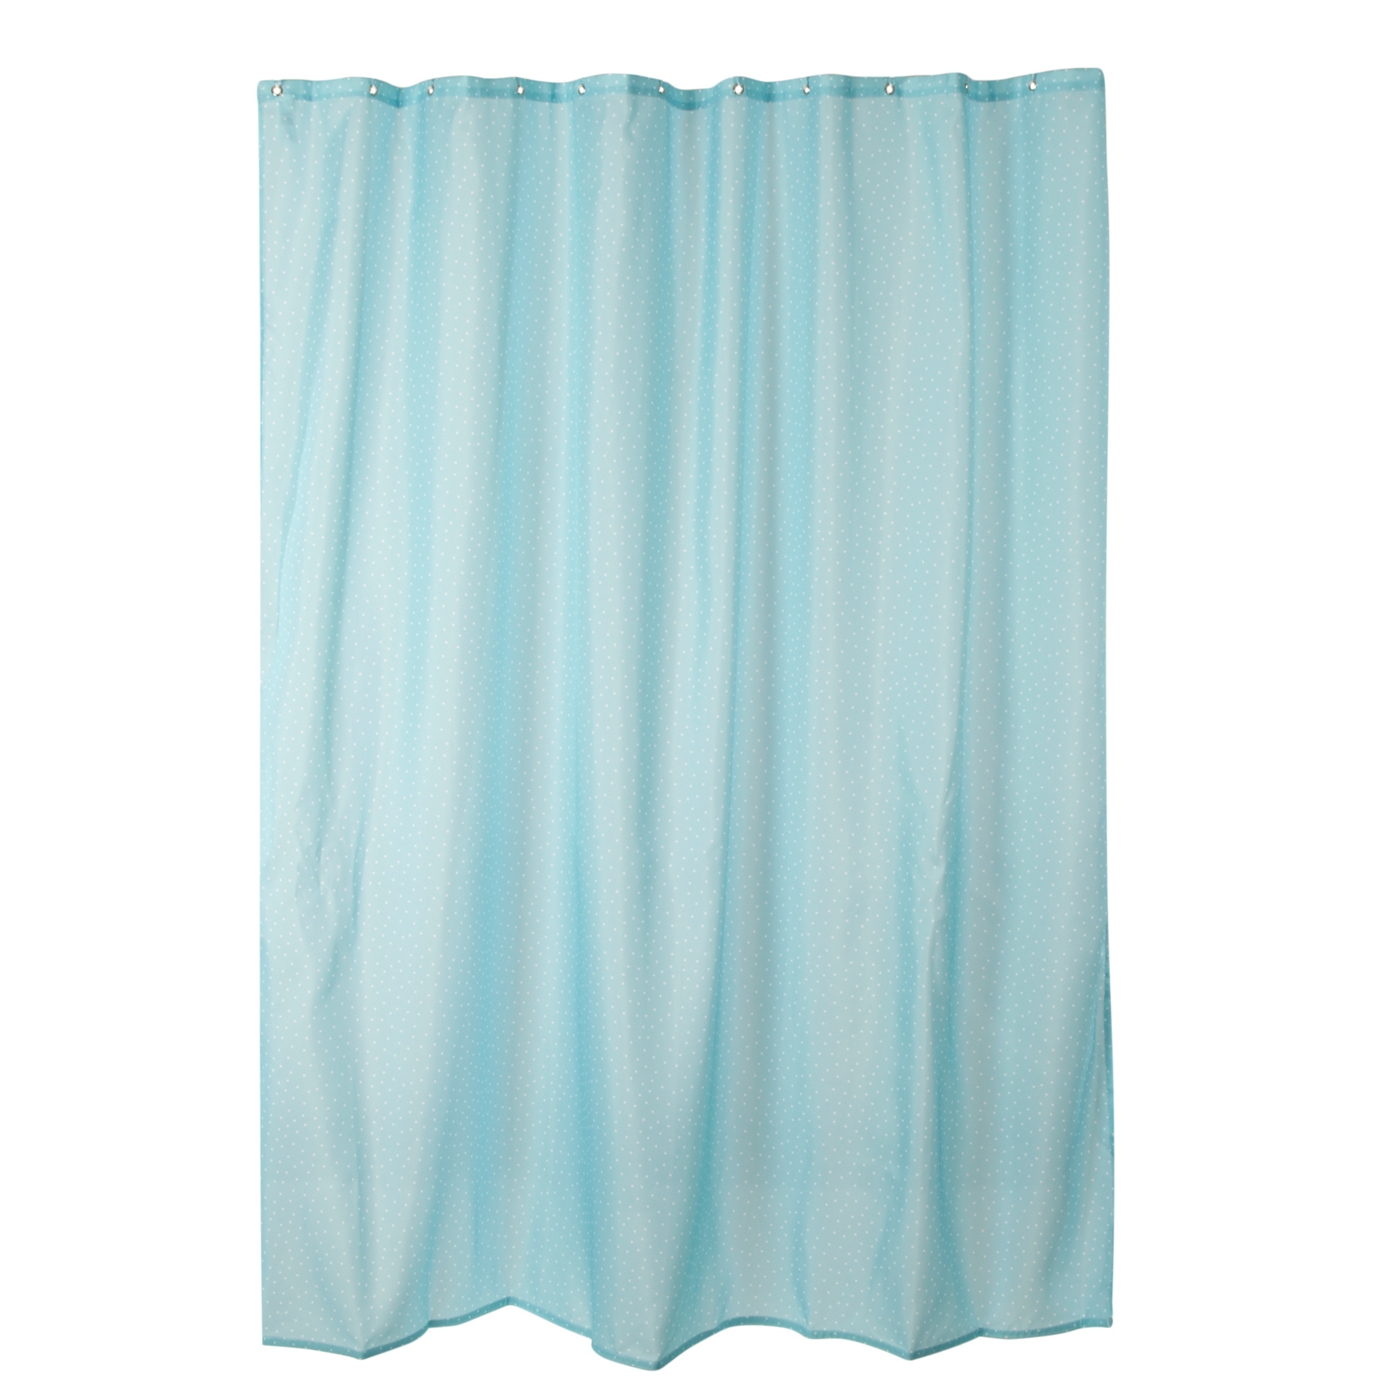 Light blue polka dot printed shower curtain